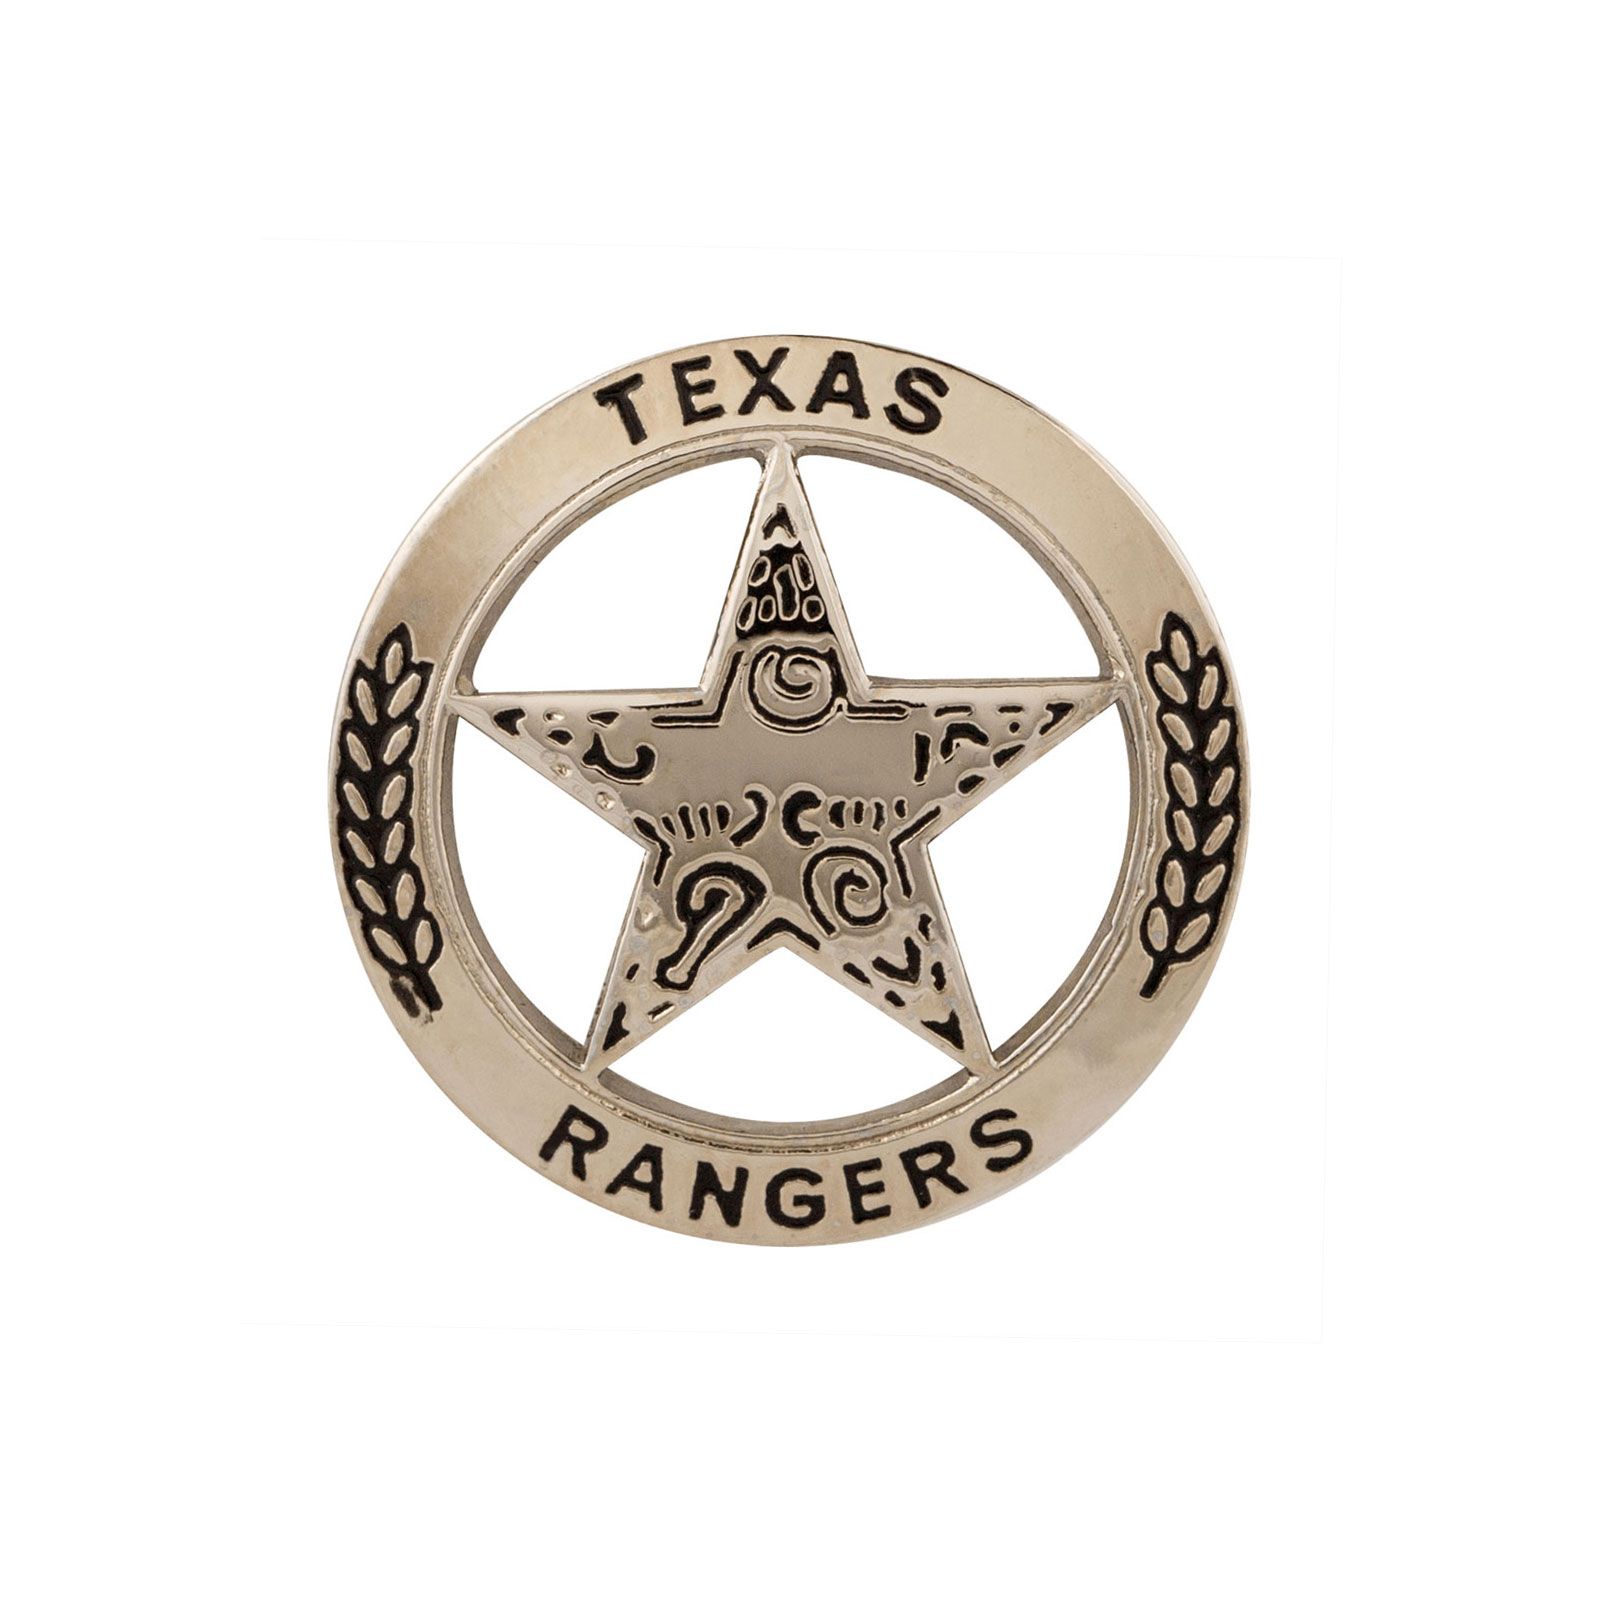 texas rangers children's apparel